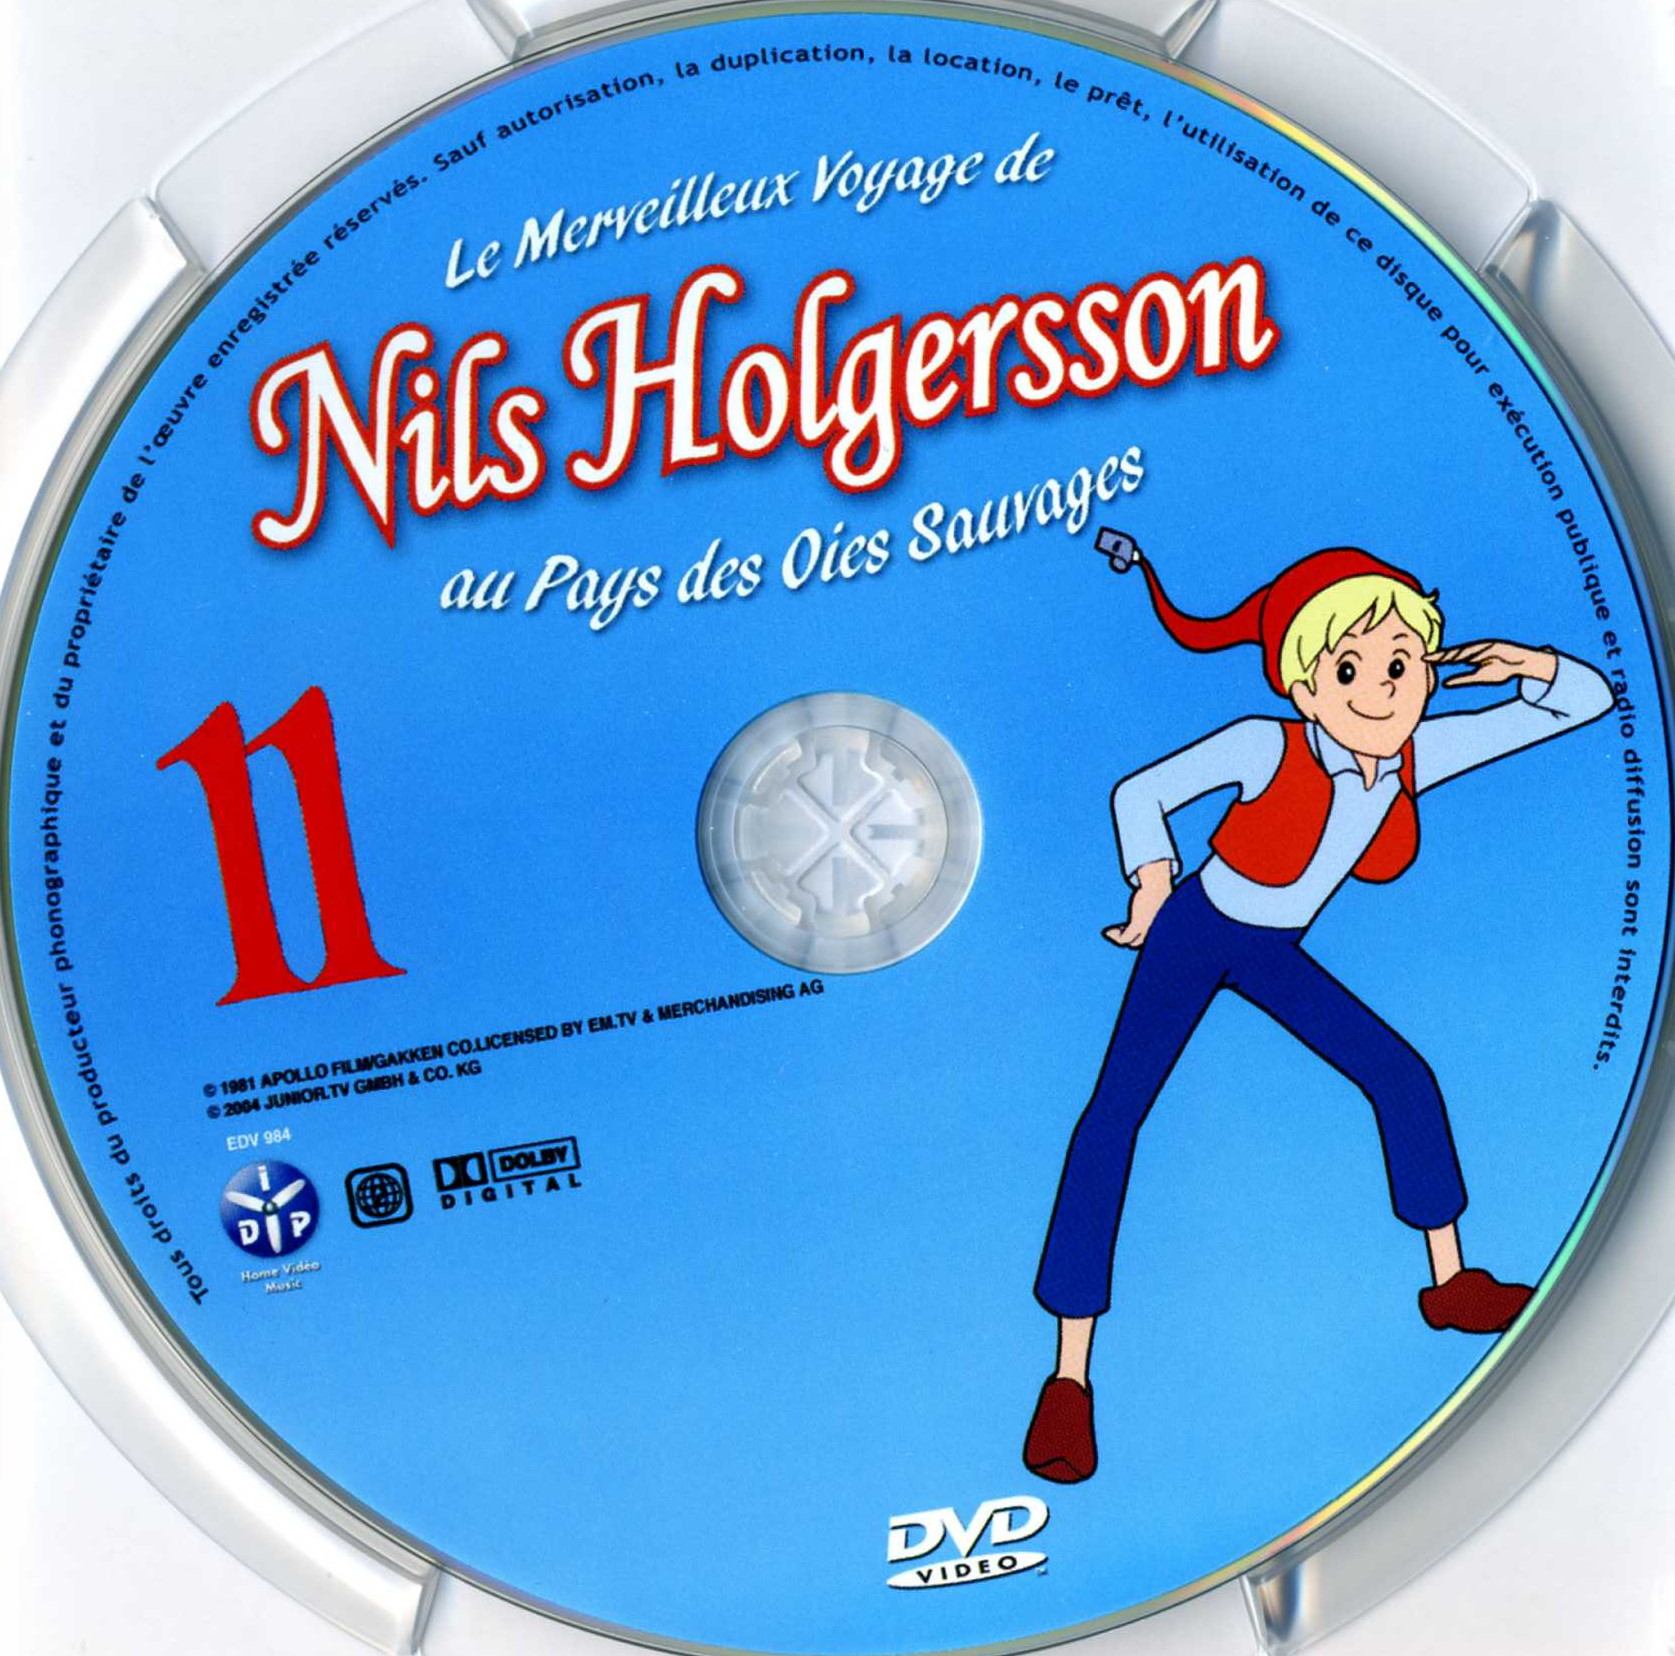 Nils Holgersson vol 11